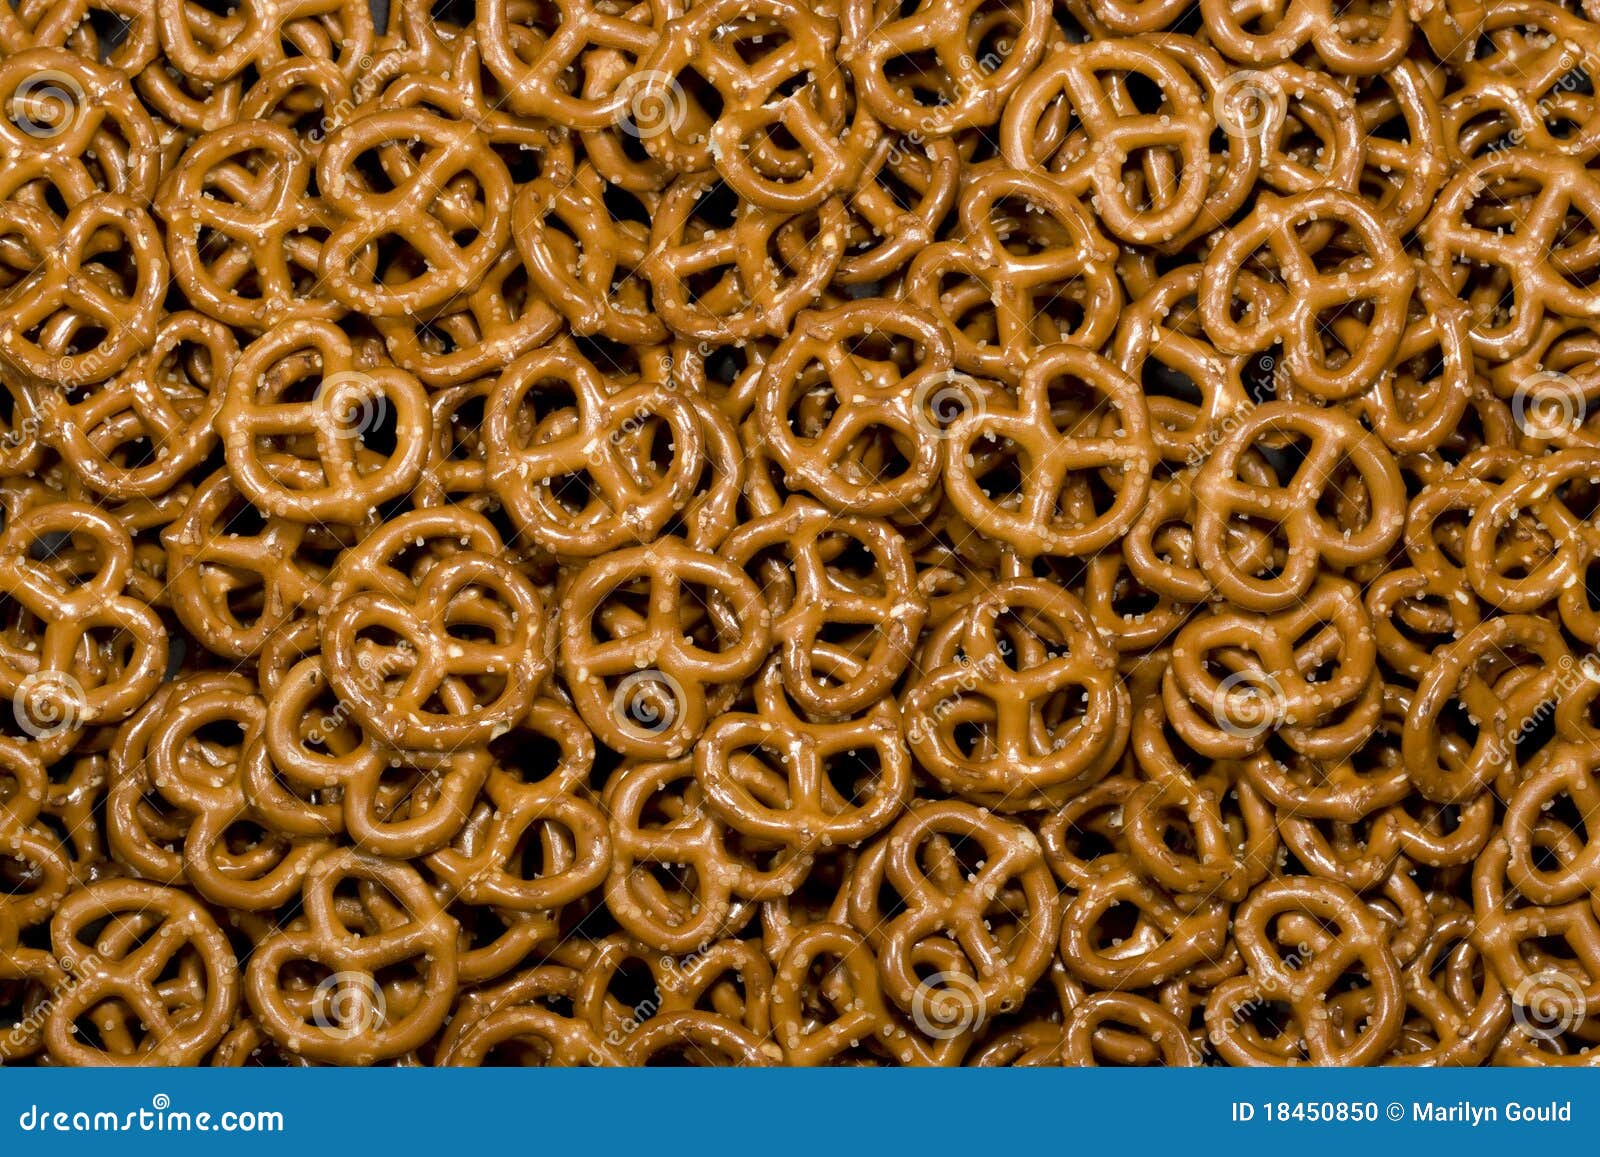 twisted pretzels